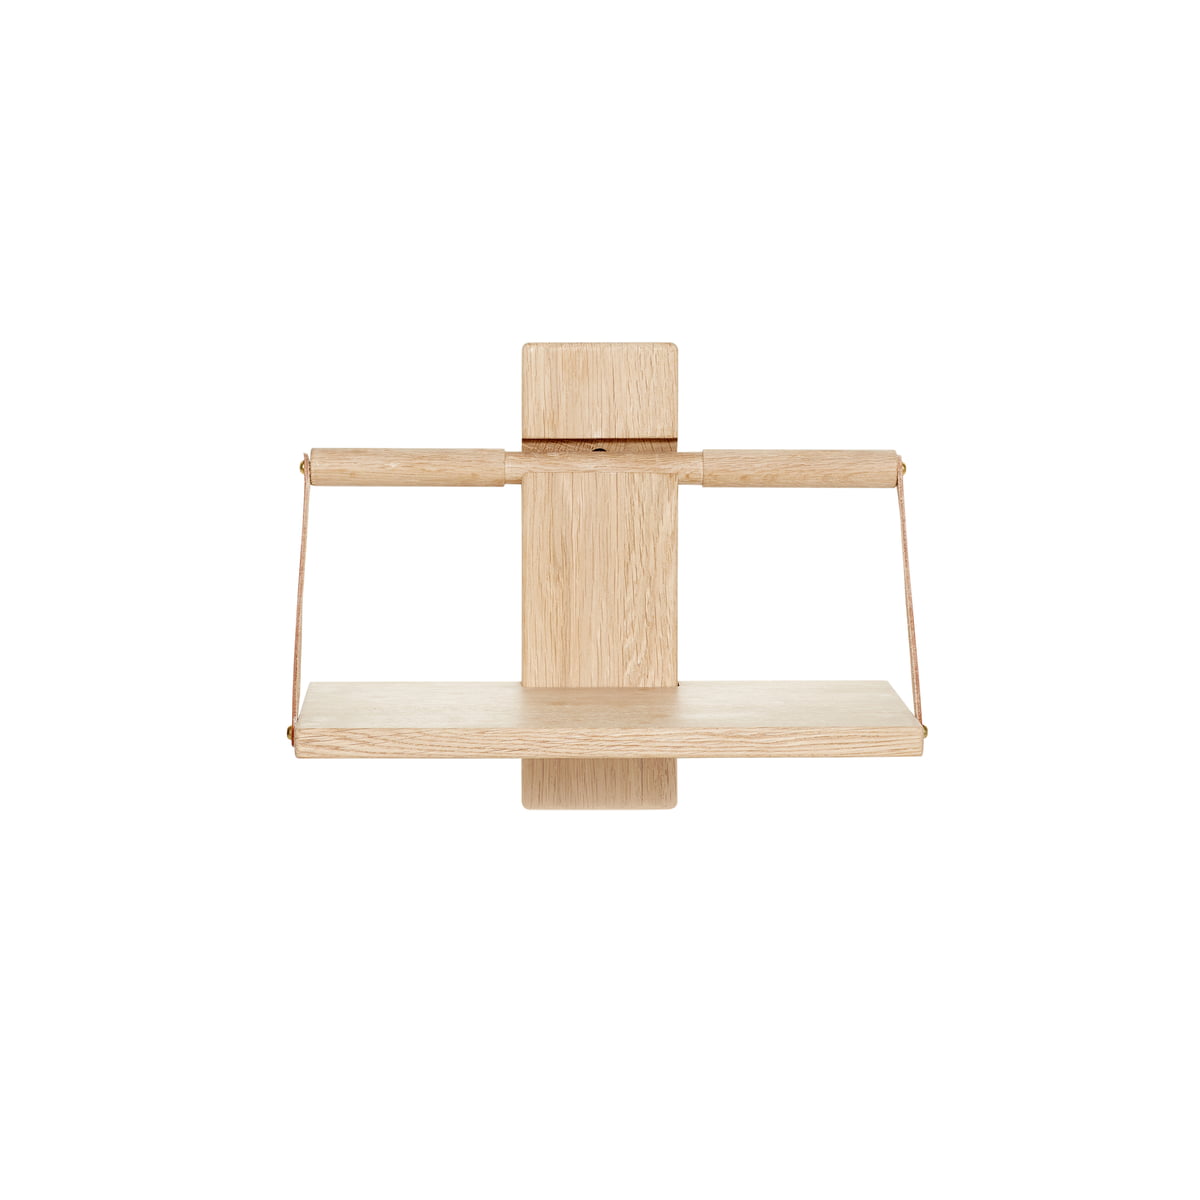 Andersen Furniture - étagère à suspendre Wood Wall, 30 x 18 x 24 cm, chêne